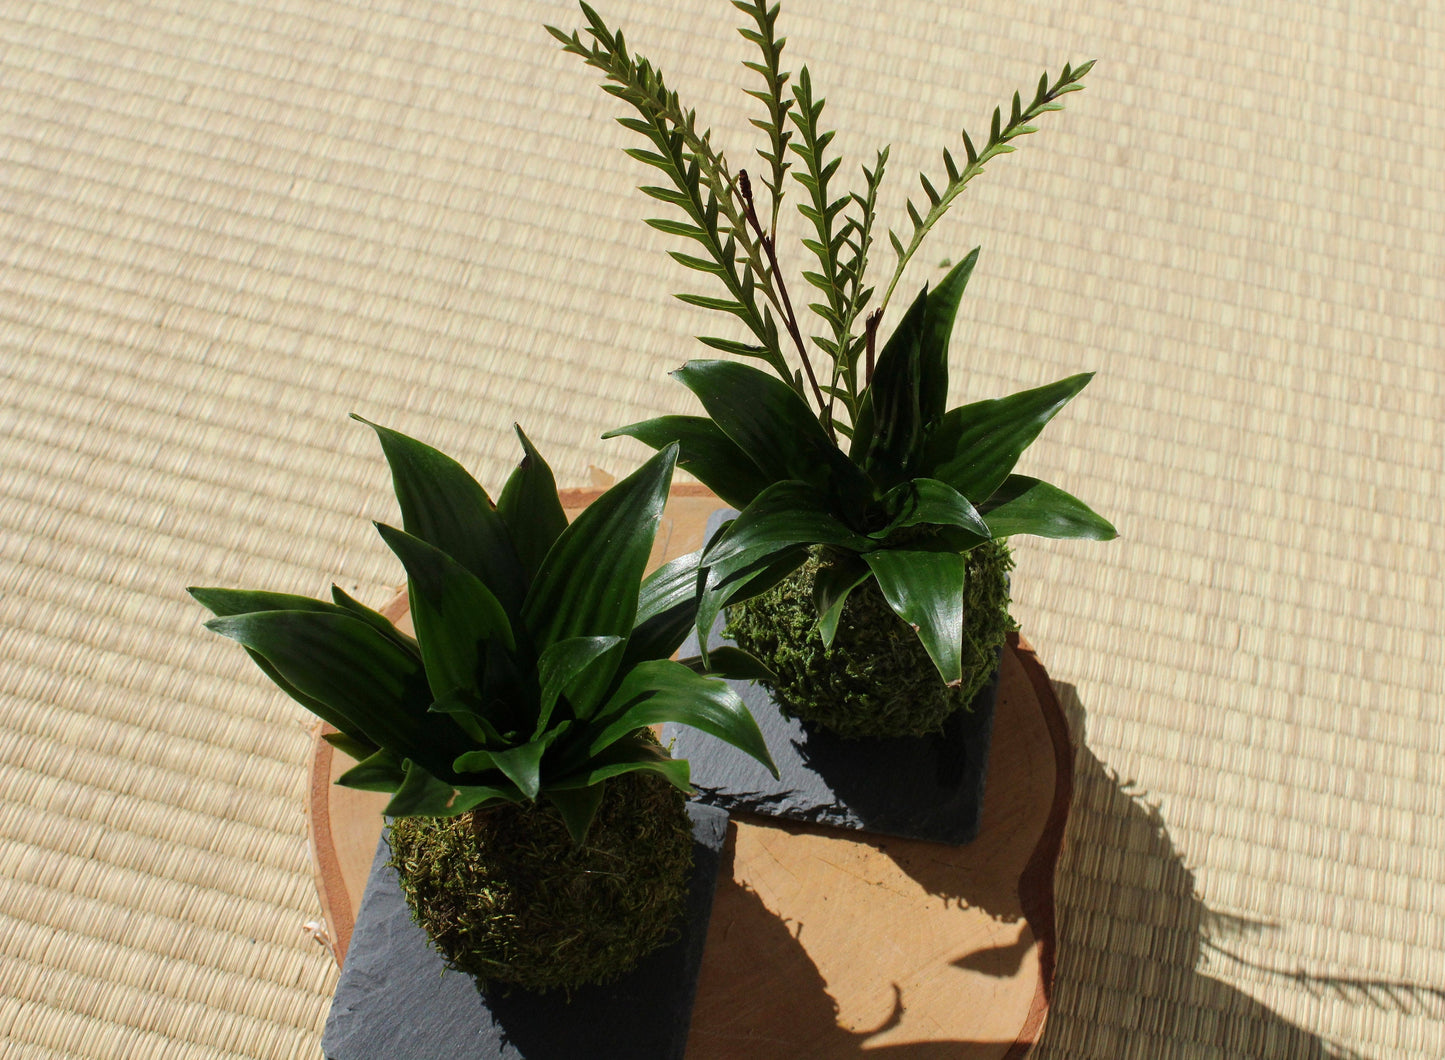 Mini Janet Craig plant  Kokedama - Moss ball, Living Japanese art, spin off of Bonsai!